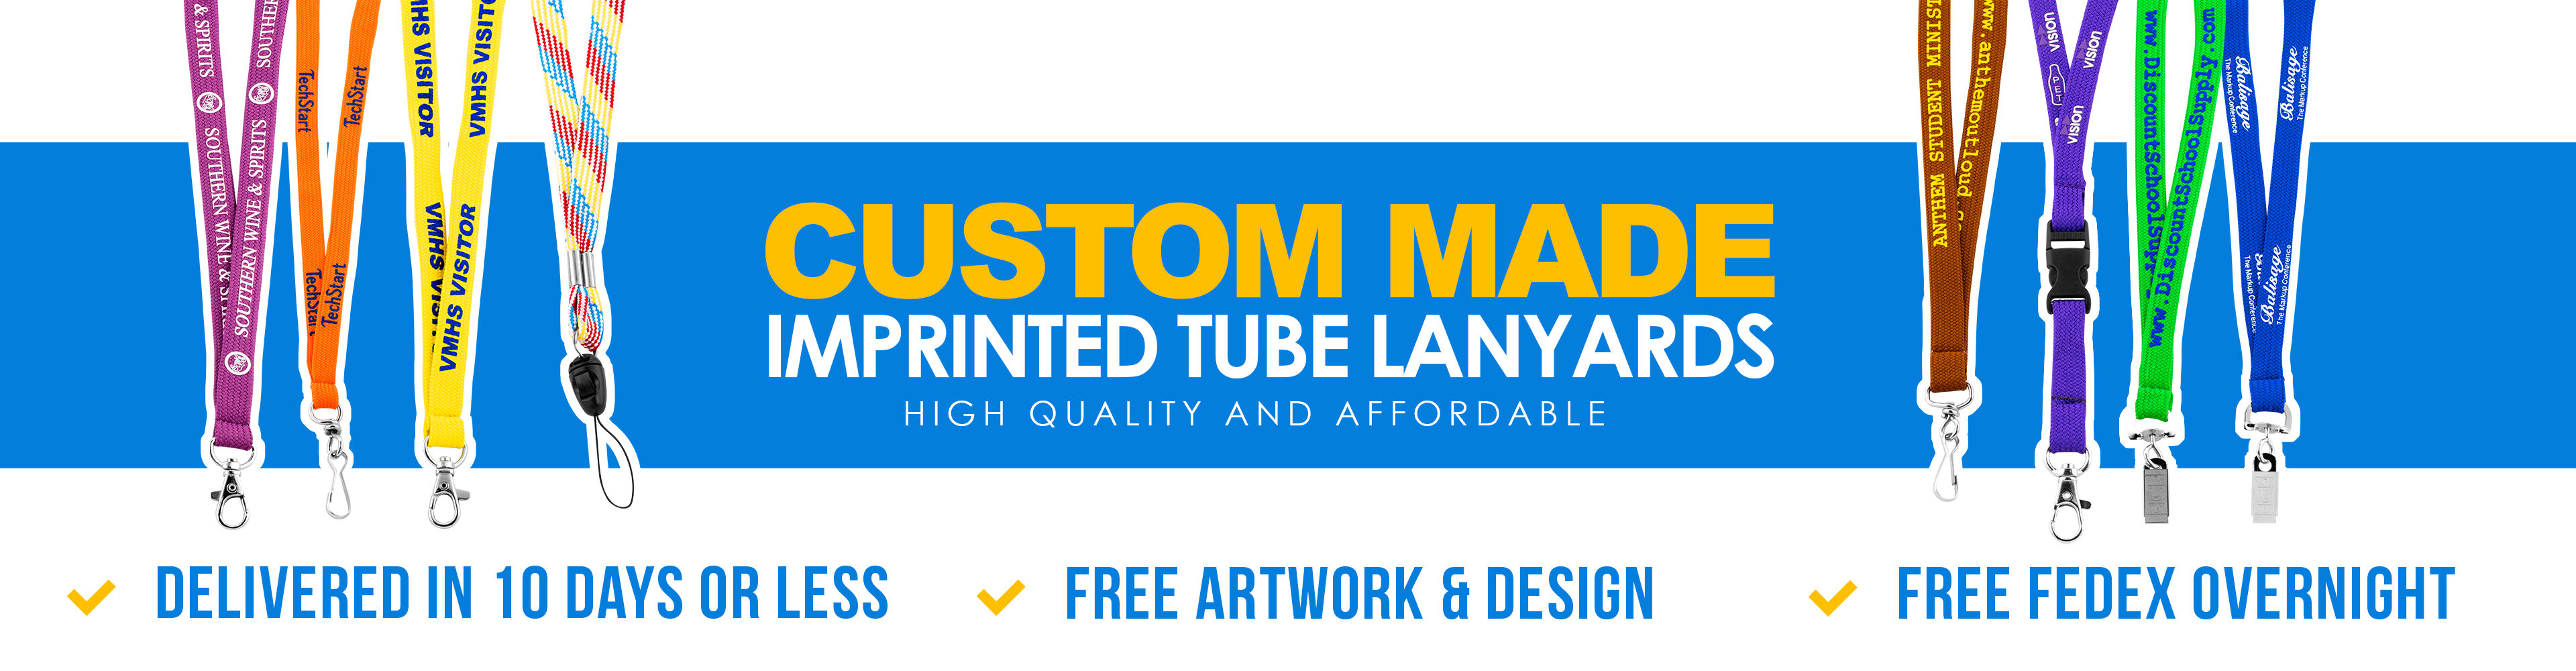 custom imprinted tube lanyards